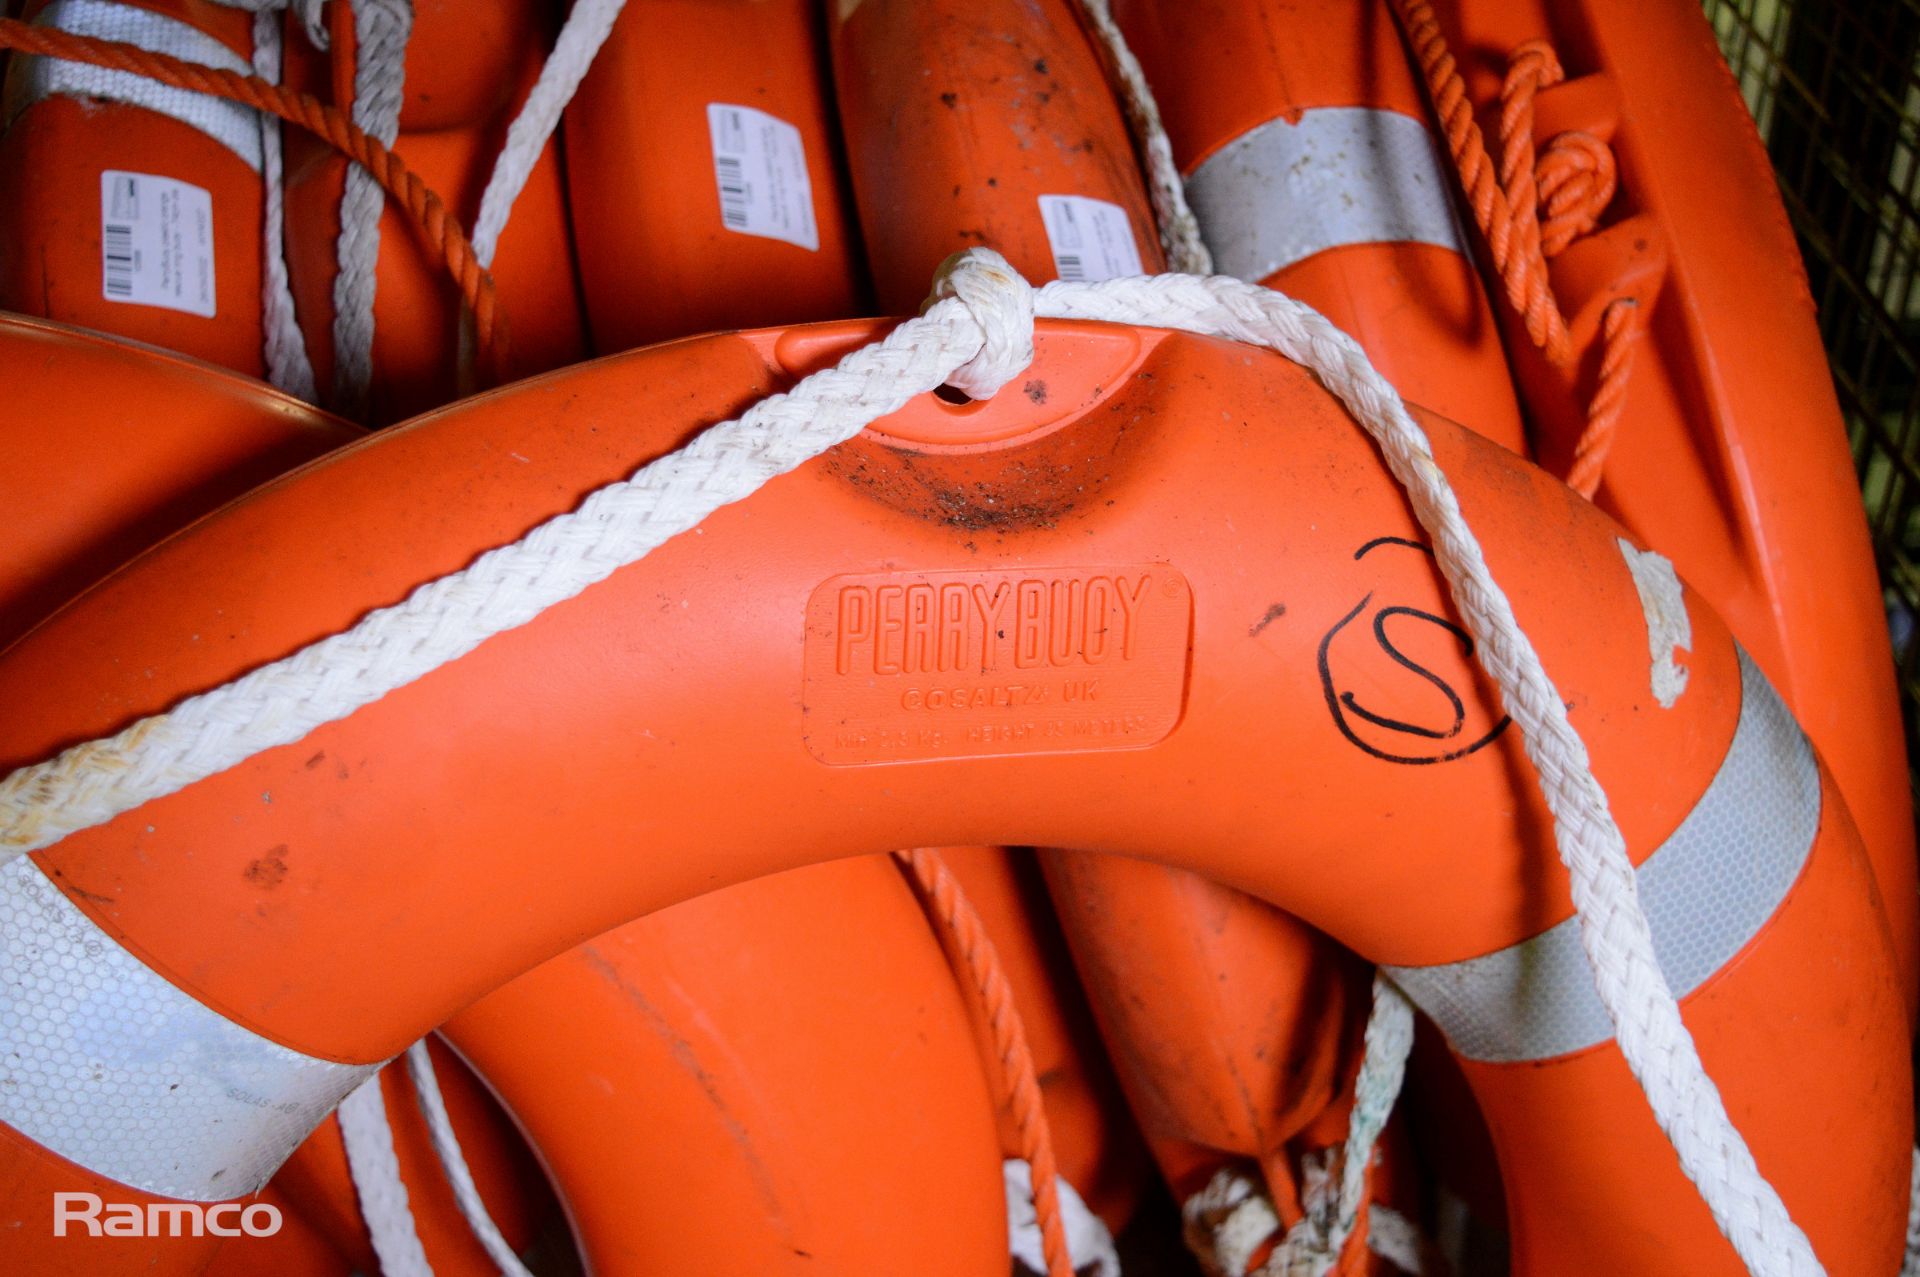 12x Perry Buoy plastic orange rescue ring buoys - 74cm diameter - Image 2 of 2